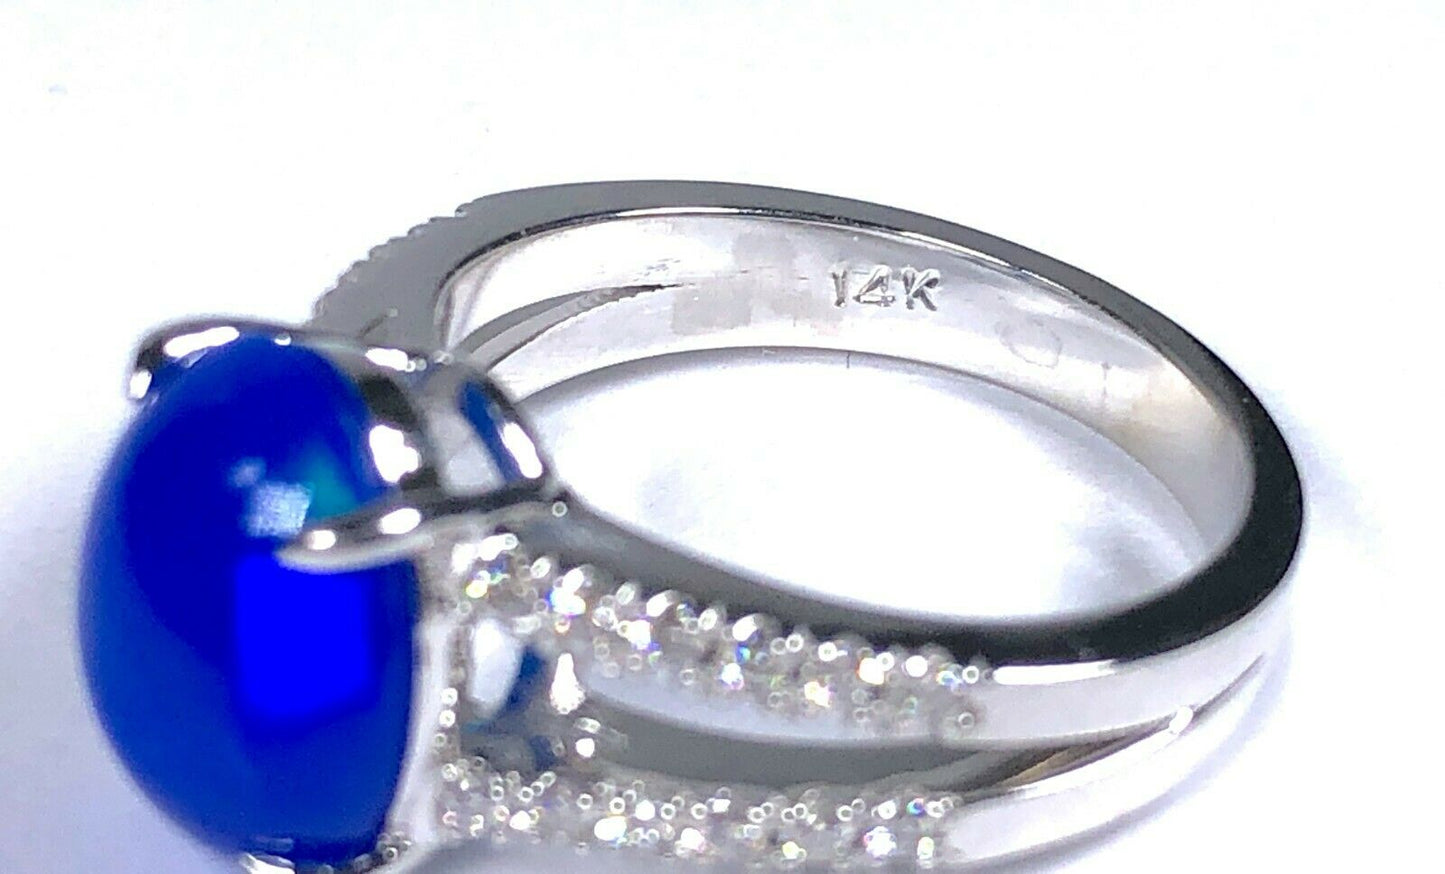 GIA 2.13 ct. Vivid Blue Opal & Diamond Ring in 14K White Gold